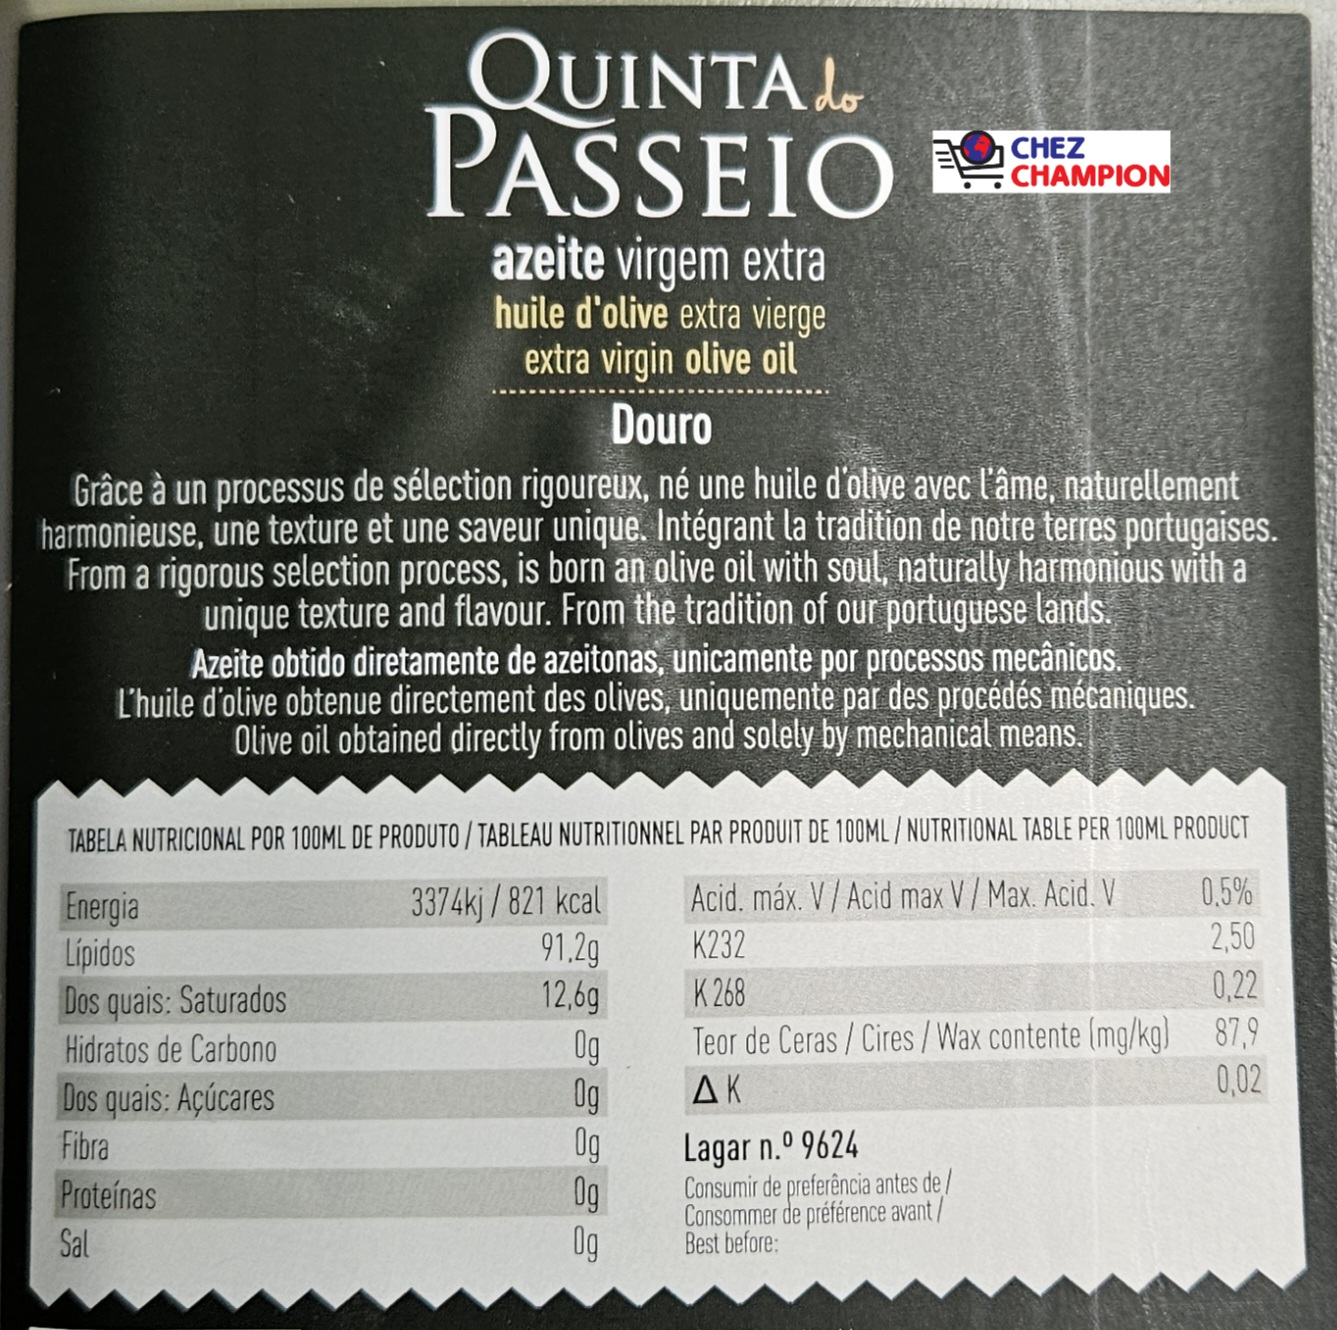 Quinta do passeio azeite virgem extra douro – huile d’olive extra vierge – 2l